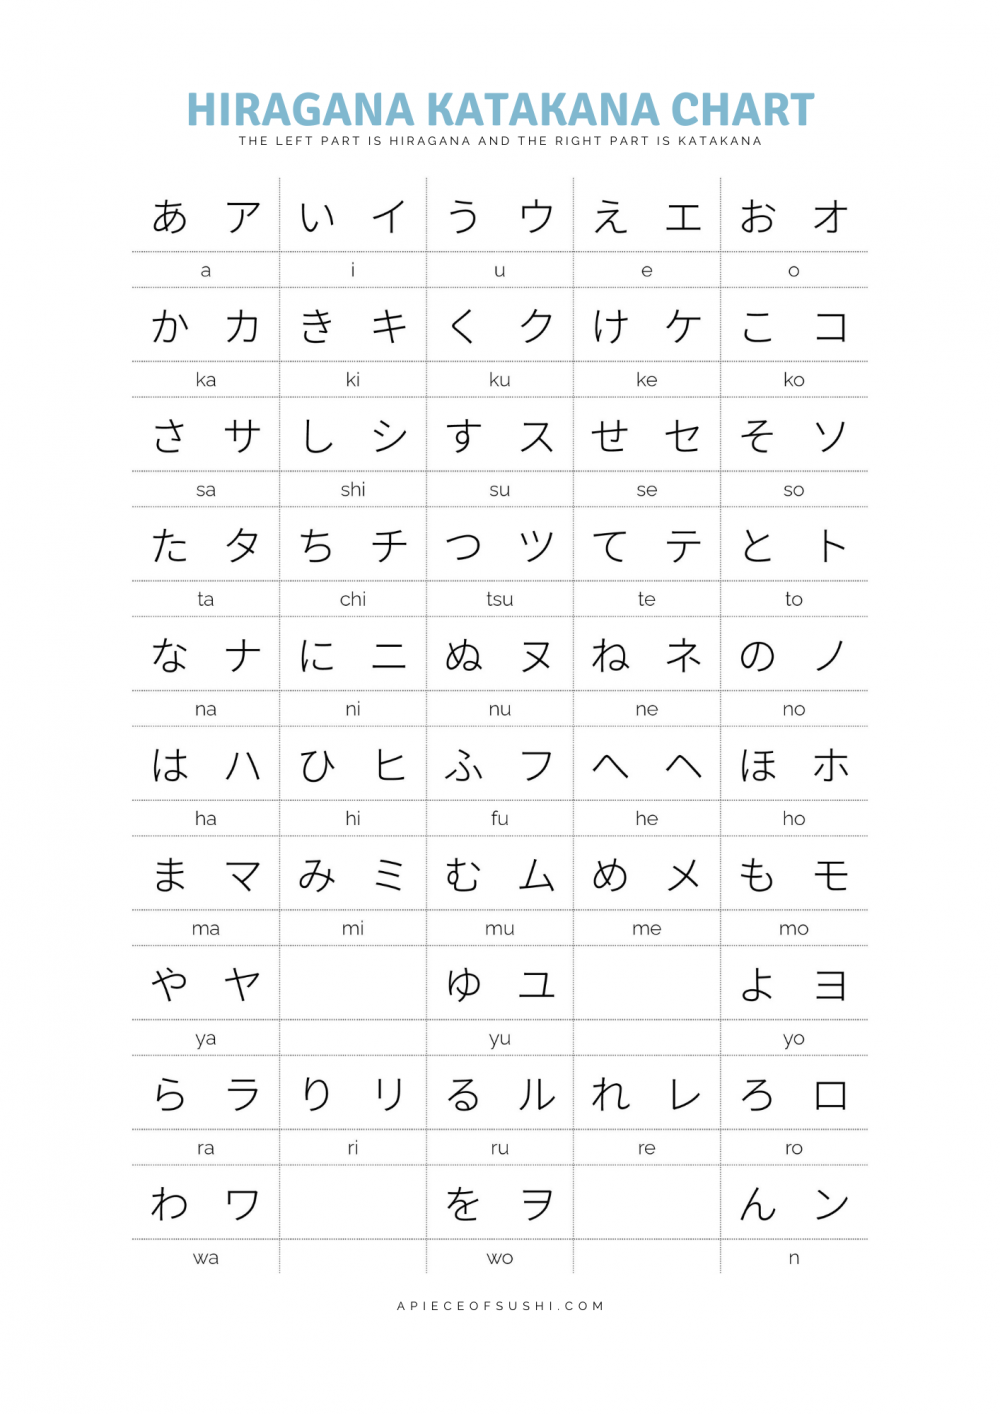 hiragana katakana flash cards printable